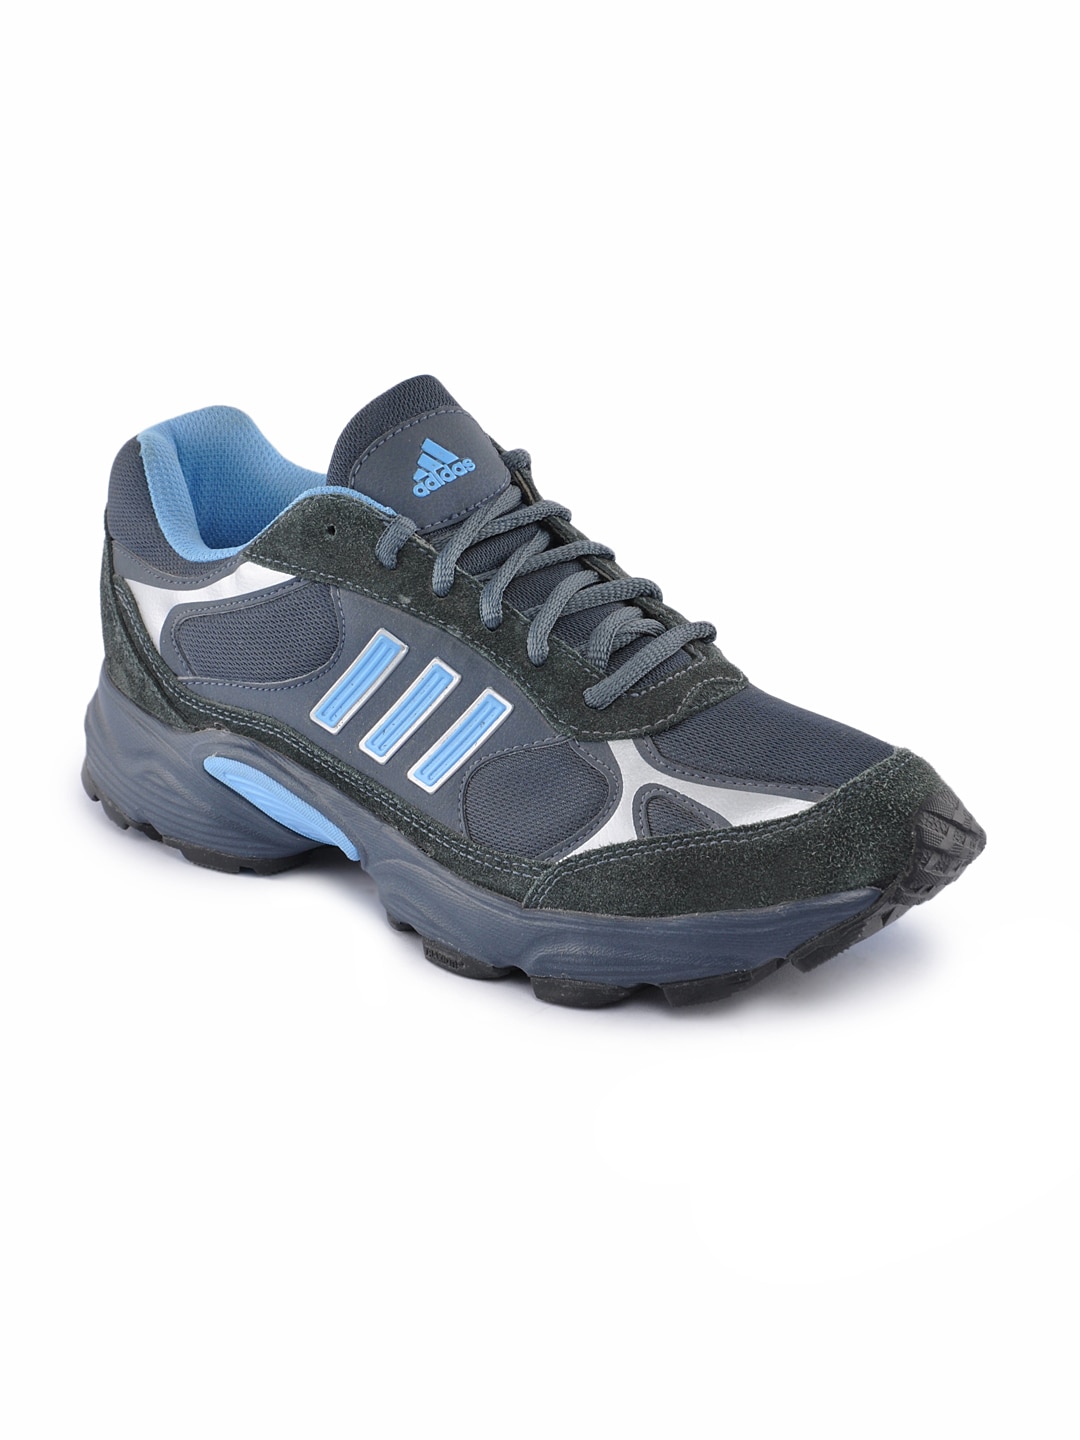 ADIDAS Men Blue Talus Runner Sports Shoes